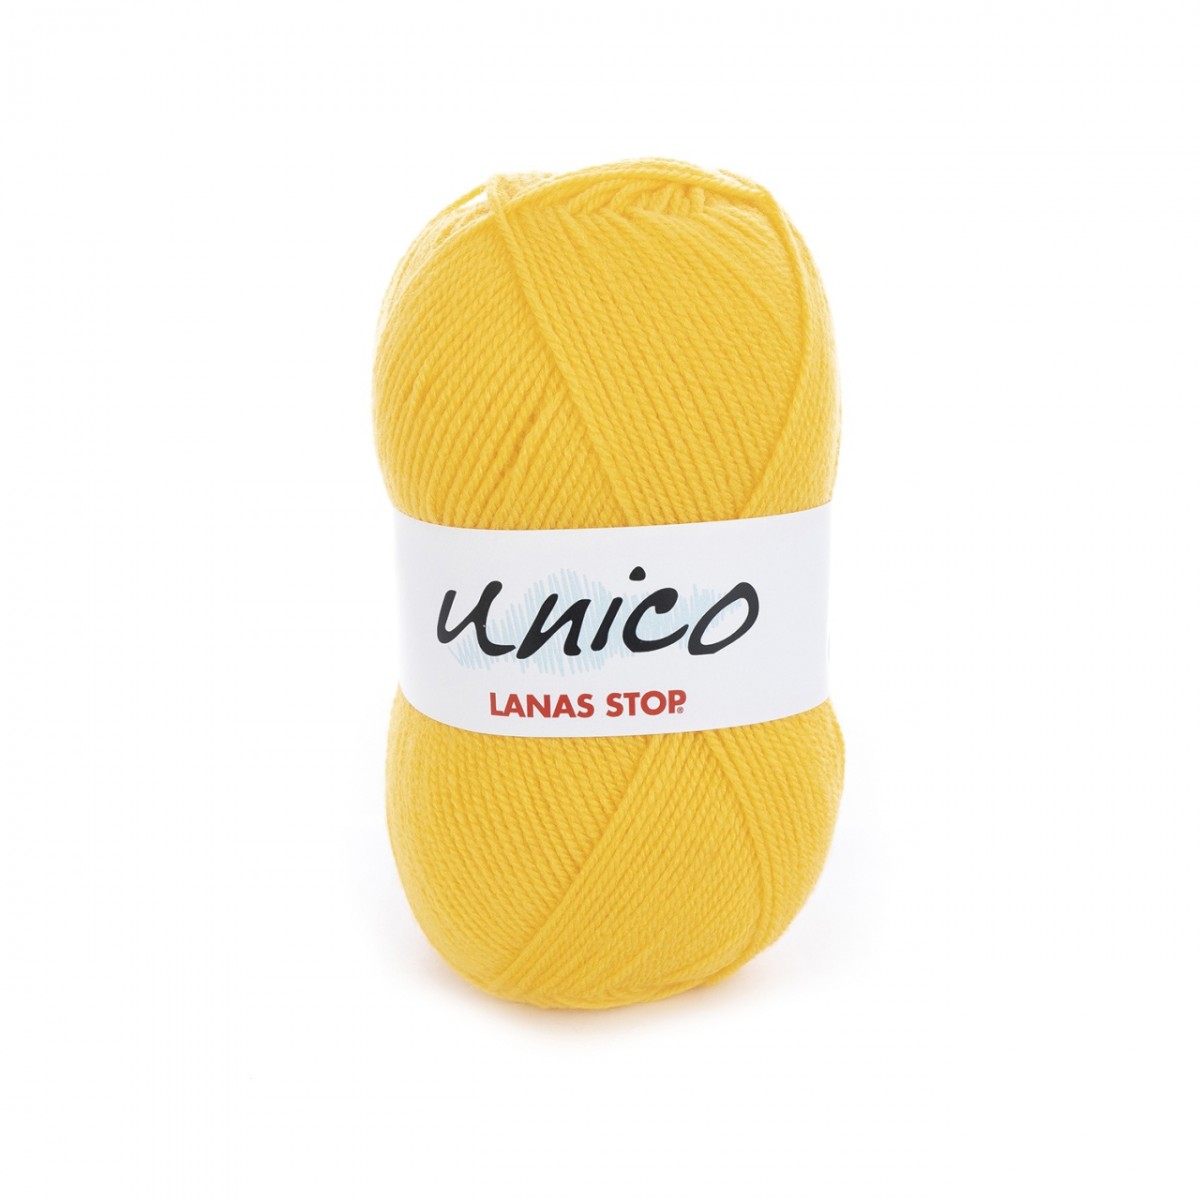 2 NEGRO LANAS STOP von Katia 266 m Wolle UNICO - 100 g // ca